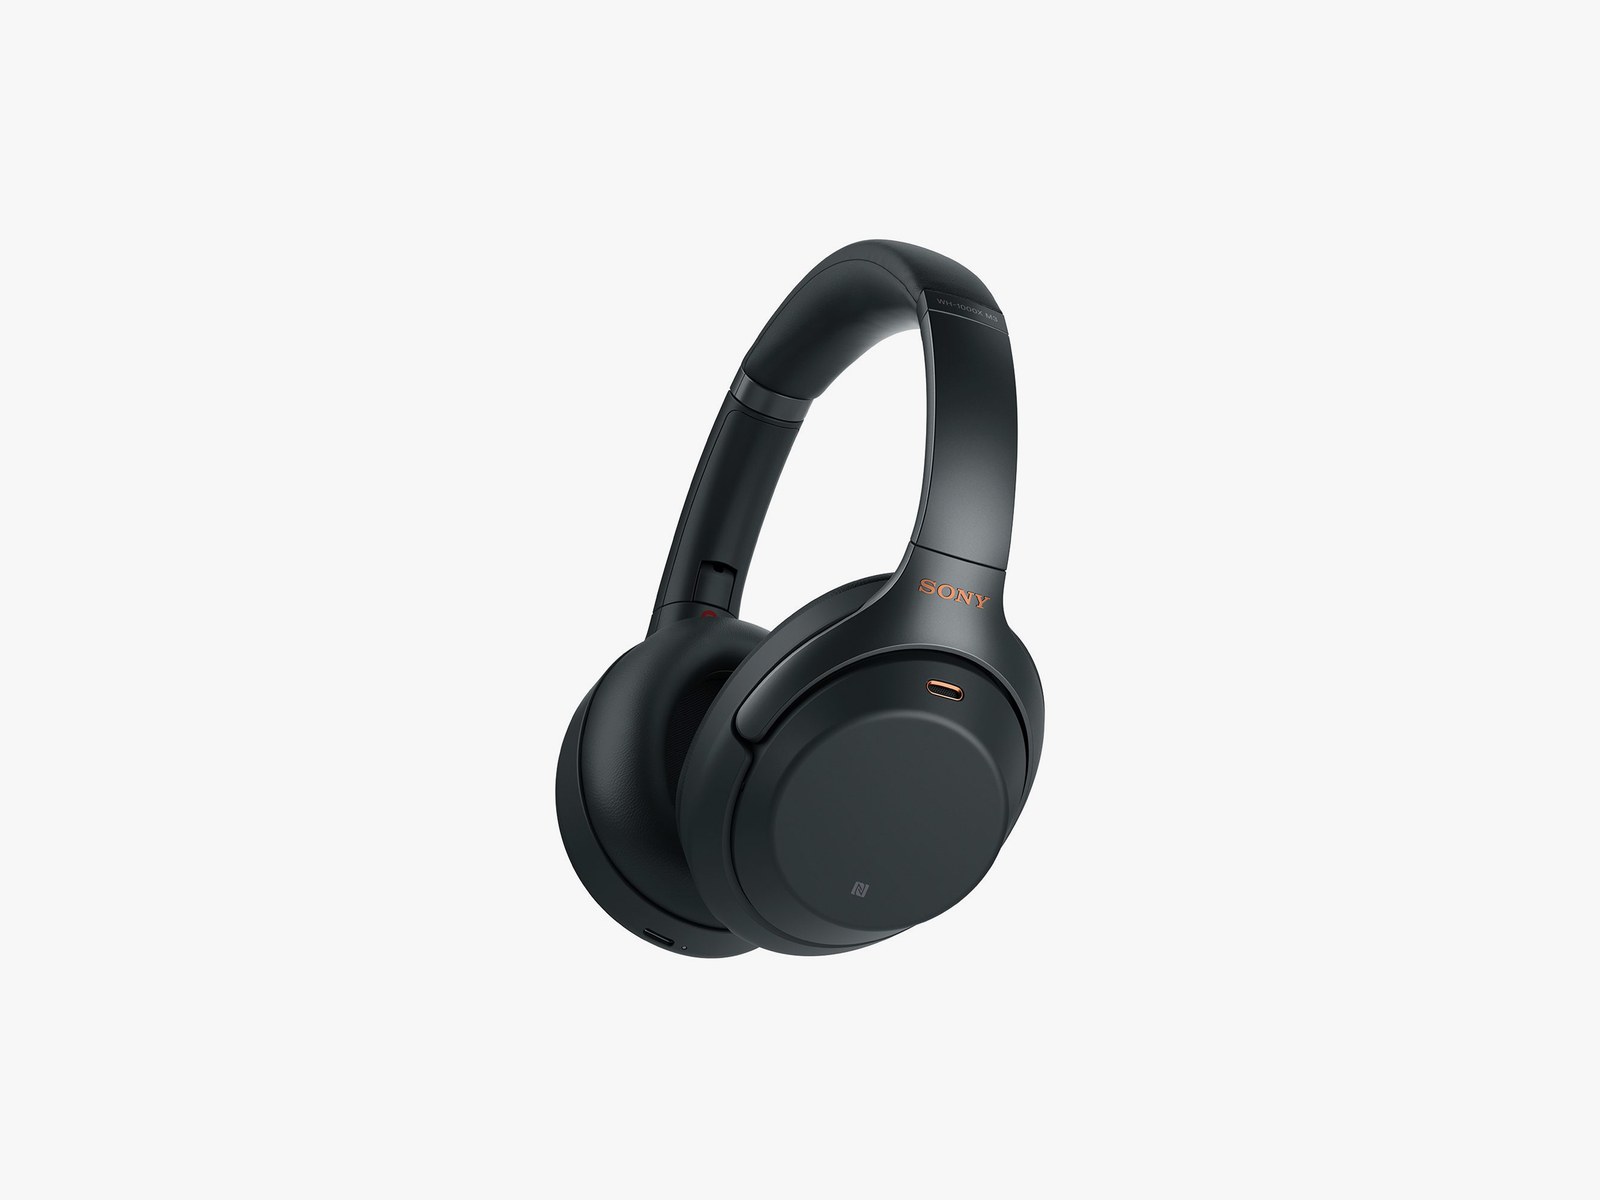 Sony WH1000XM3 headphones SOURCE Sony - بهترین هدفون بی سیم سال 2020 با بهترین کیفیت صدا